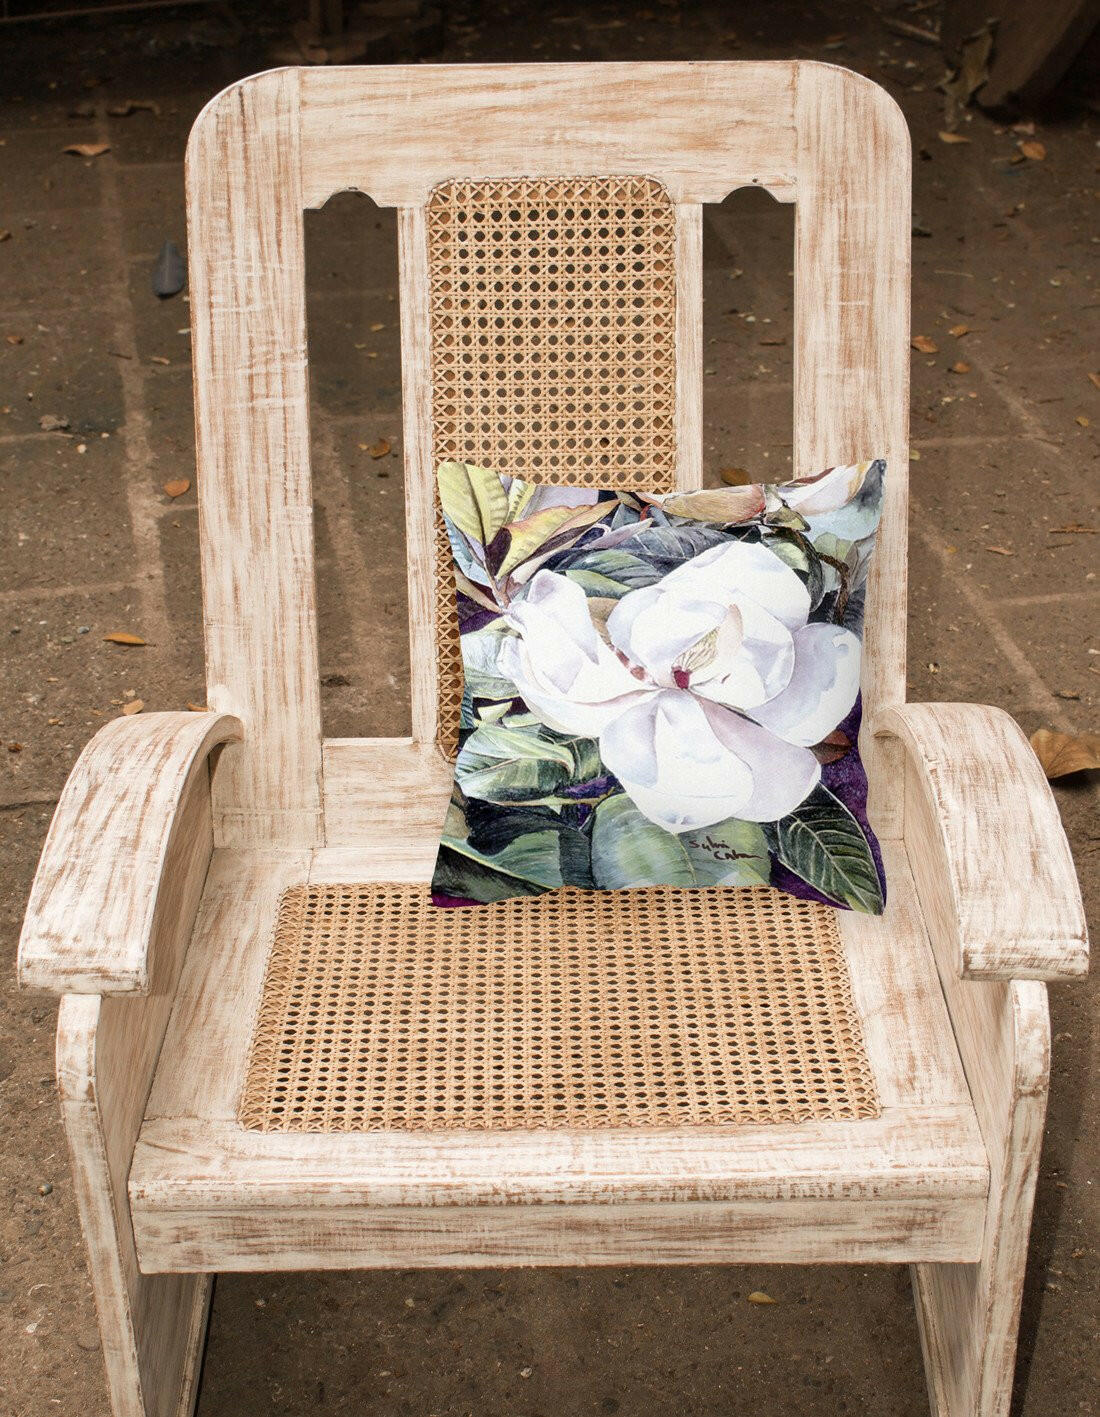 Flower - Magnolia Decorative   Canvas Fabric Pillow - the-store.com